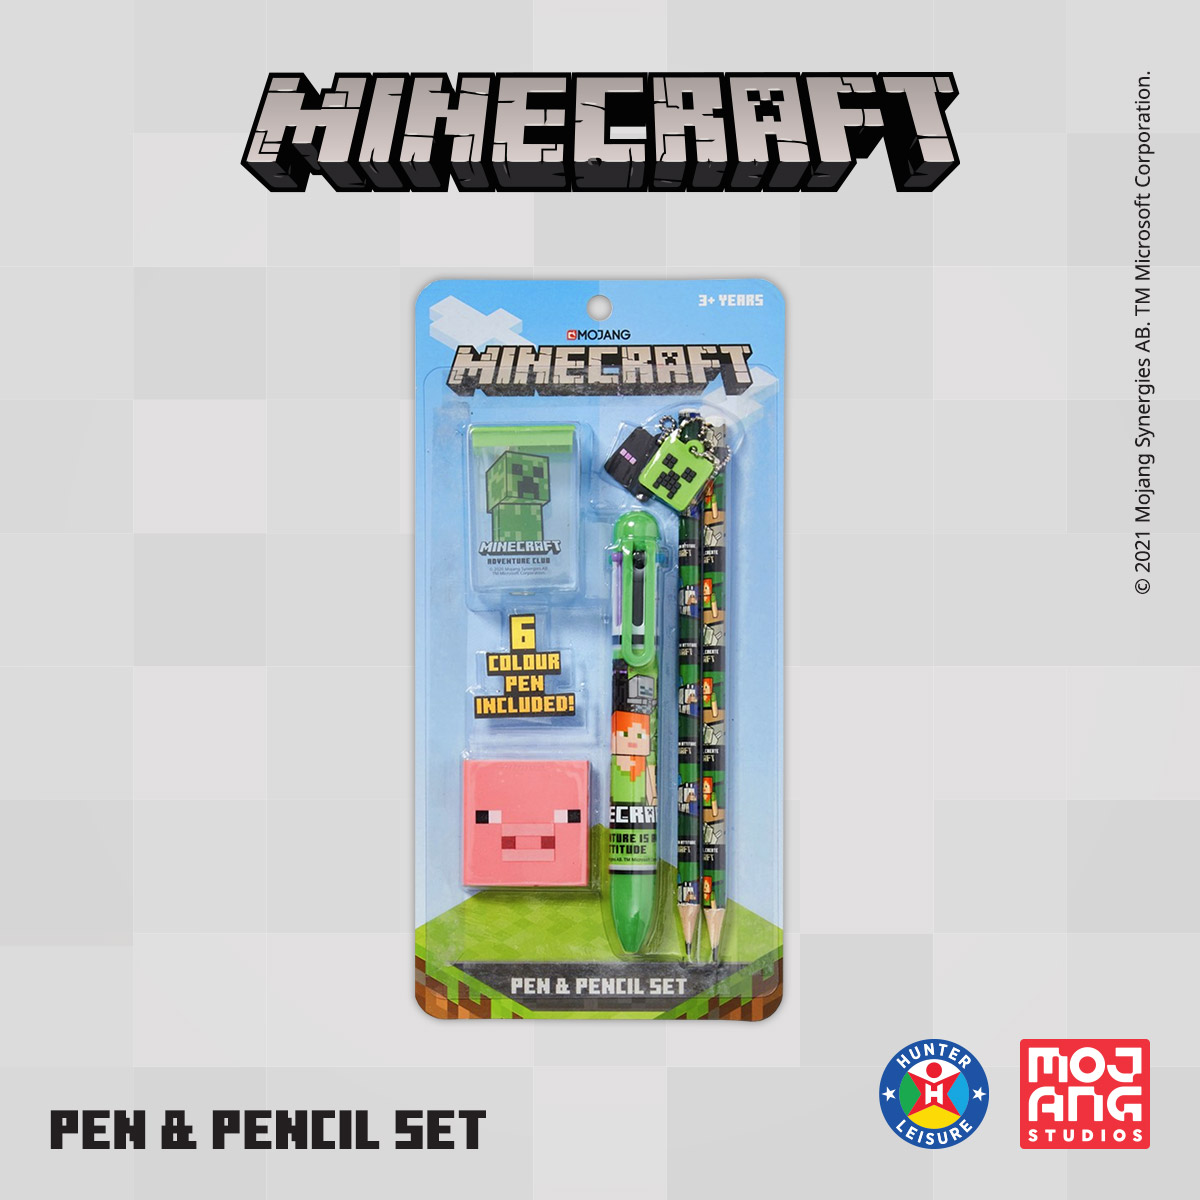 www.hunterleisure.com.au Minecraft Pen & Pencil Set Big W Hunter Leisure